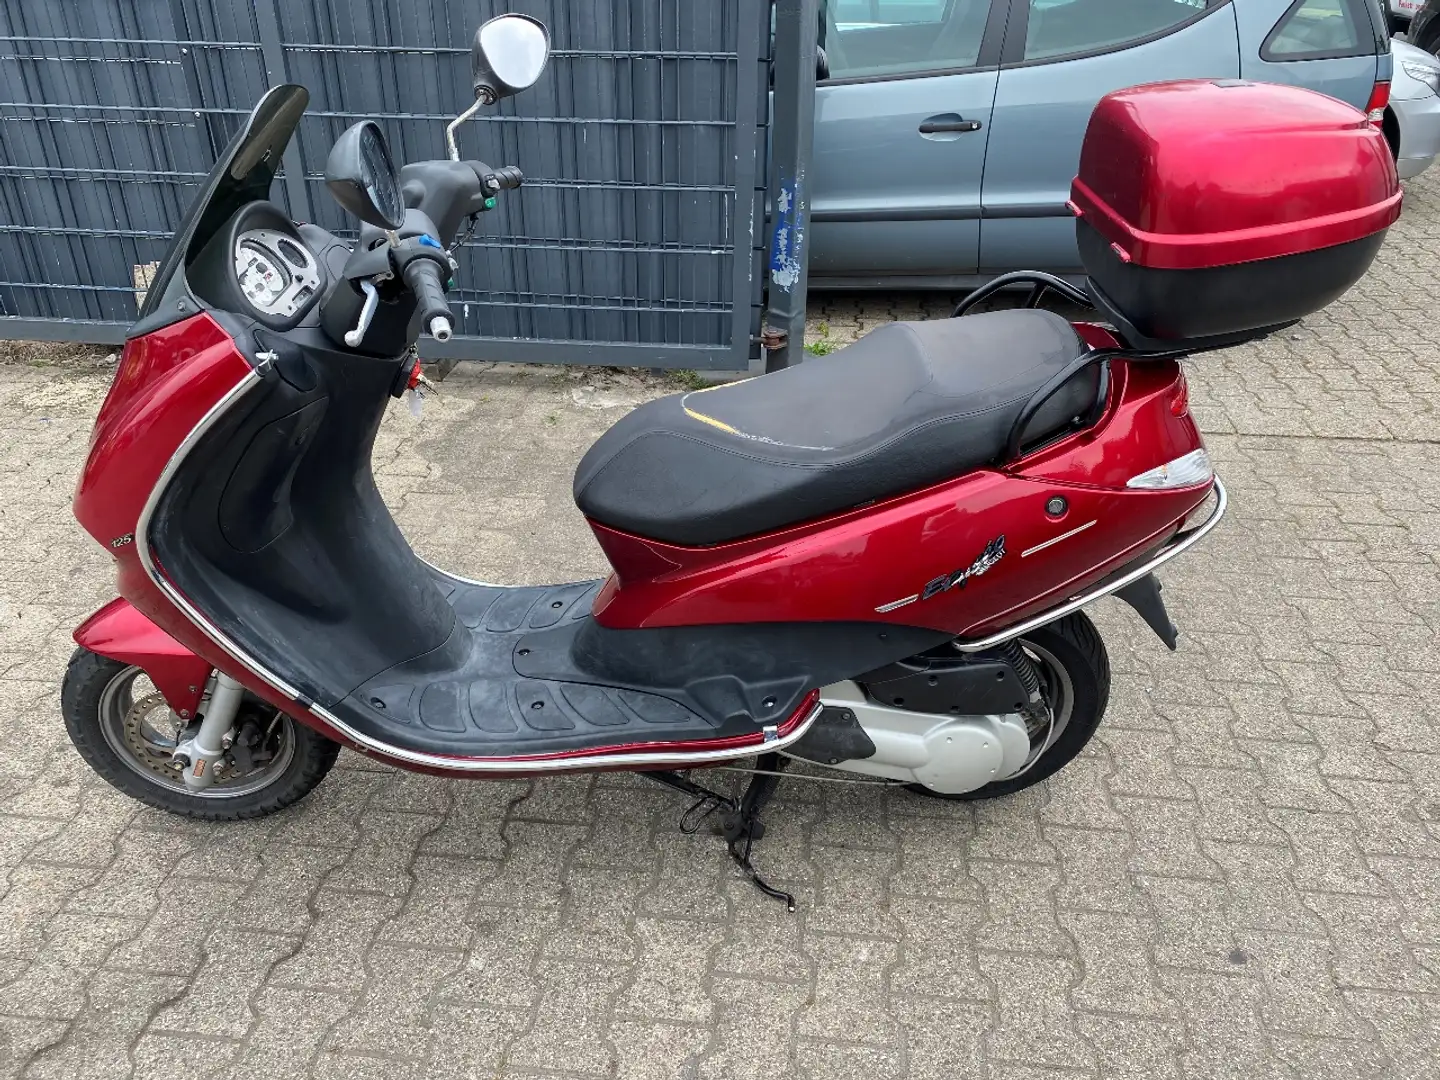 Peugeot Elyseo 125 Roller/Scooter in Rot gebraucht in Herne für € 650,-